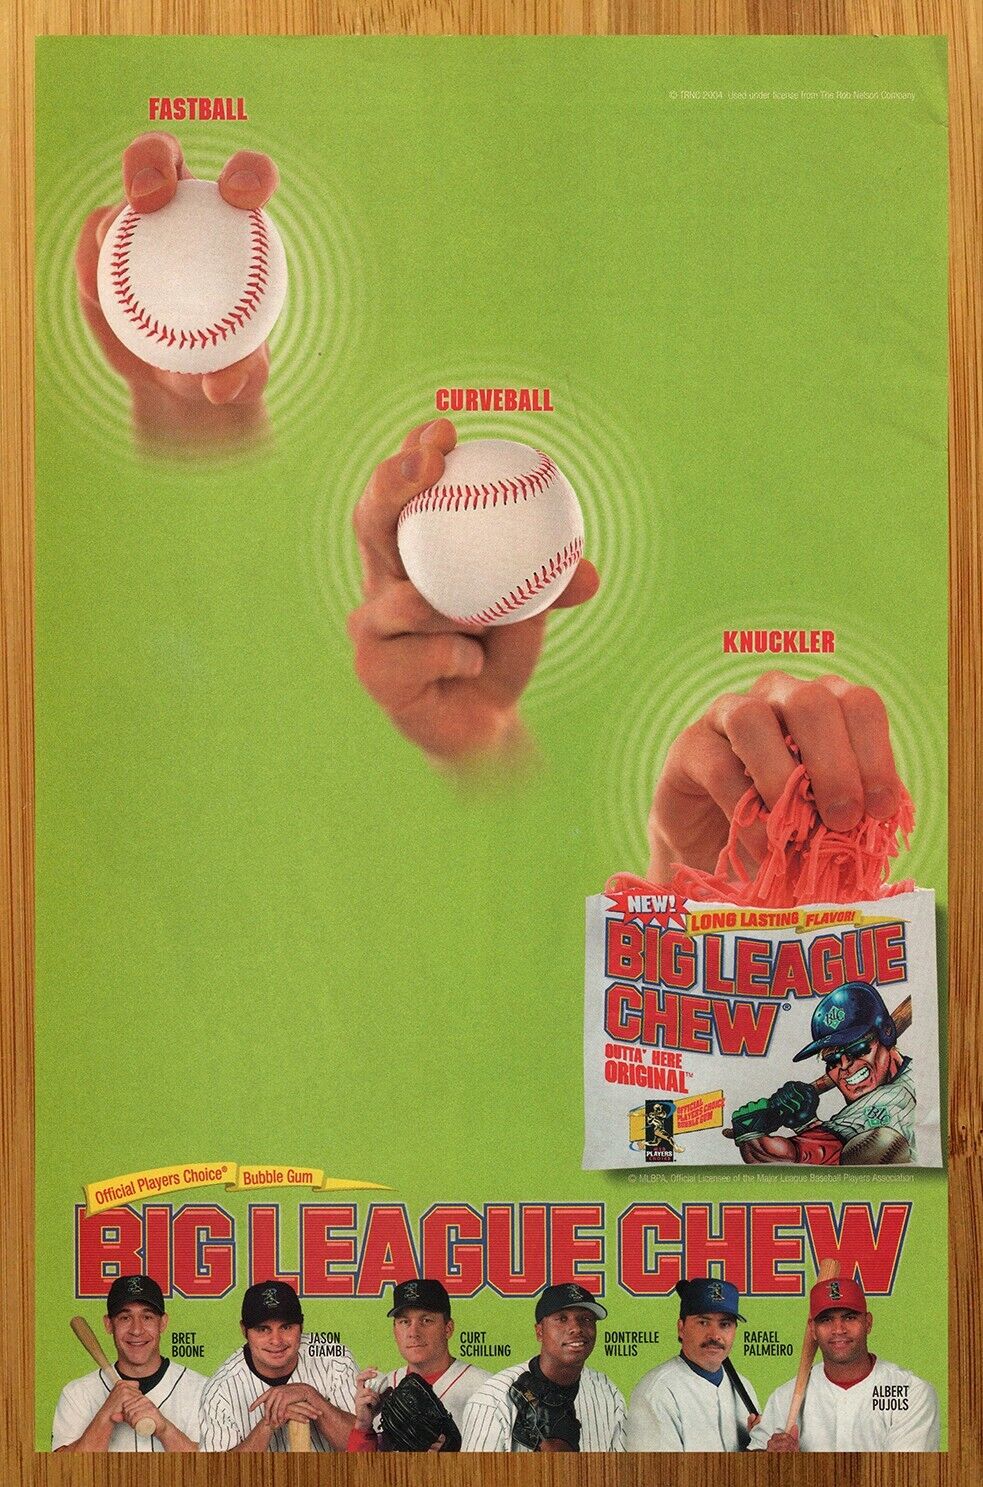 2004 Big League Chew Bubble Gum Print Ad/Poster MLB Baseball Giambi 00s Kid Art